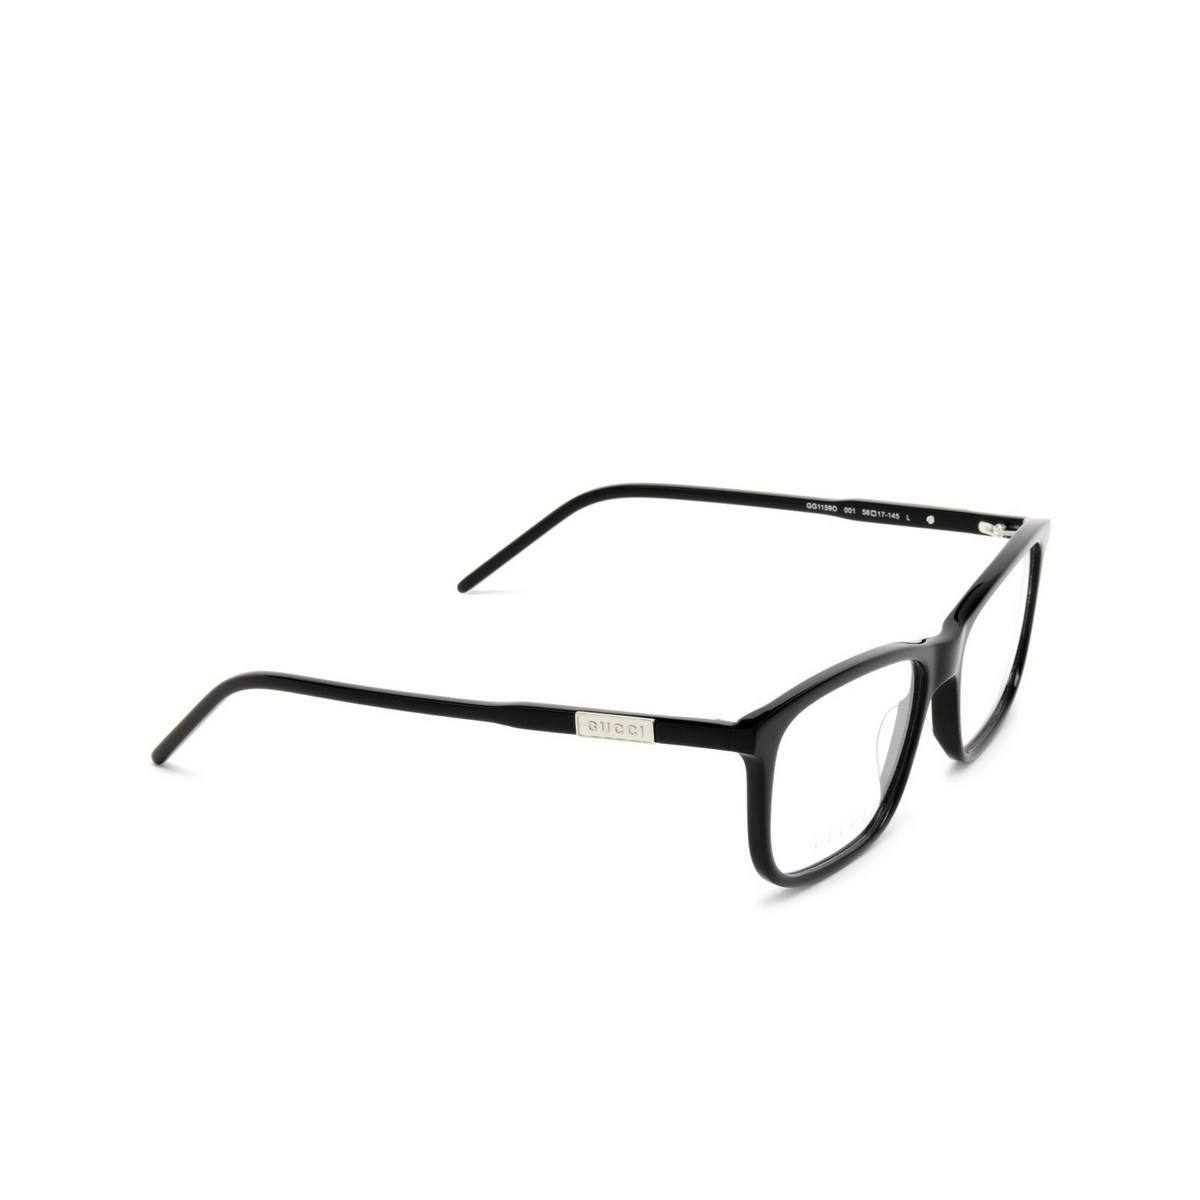 Gucci® Rectangle Eyeglasses: GG1159O color Black 001 - three-quarters view.